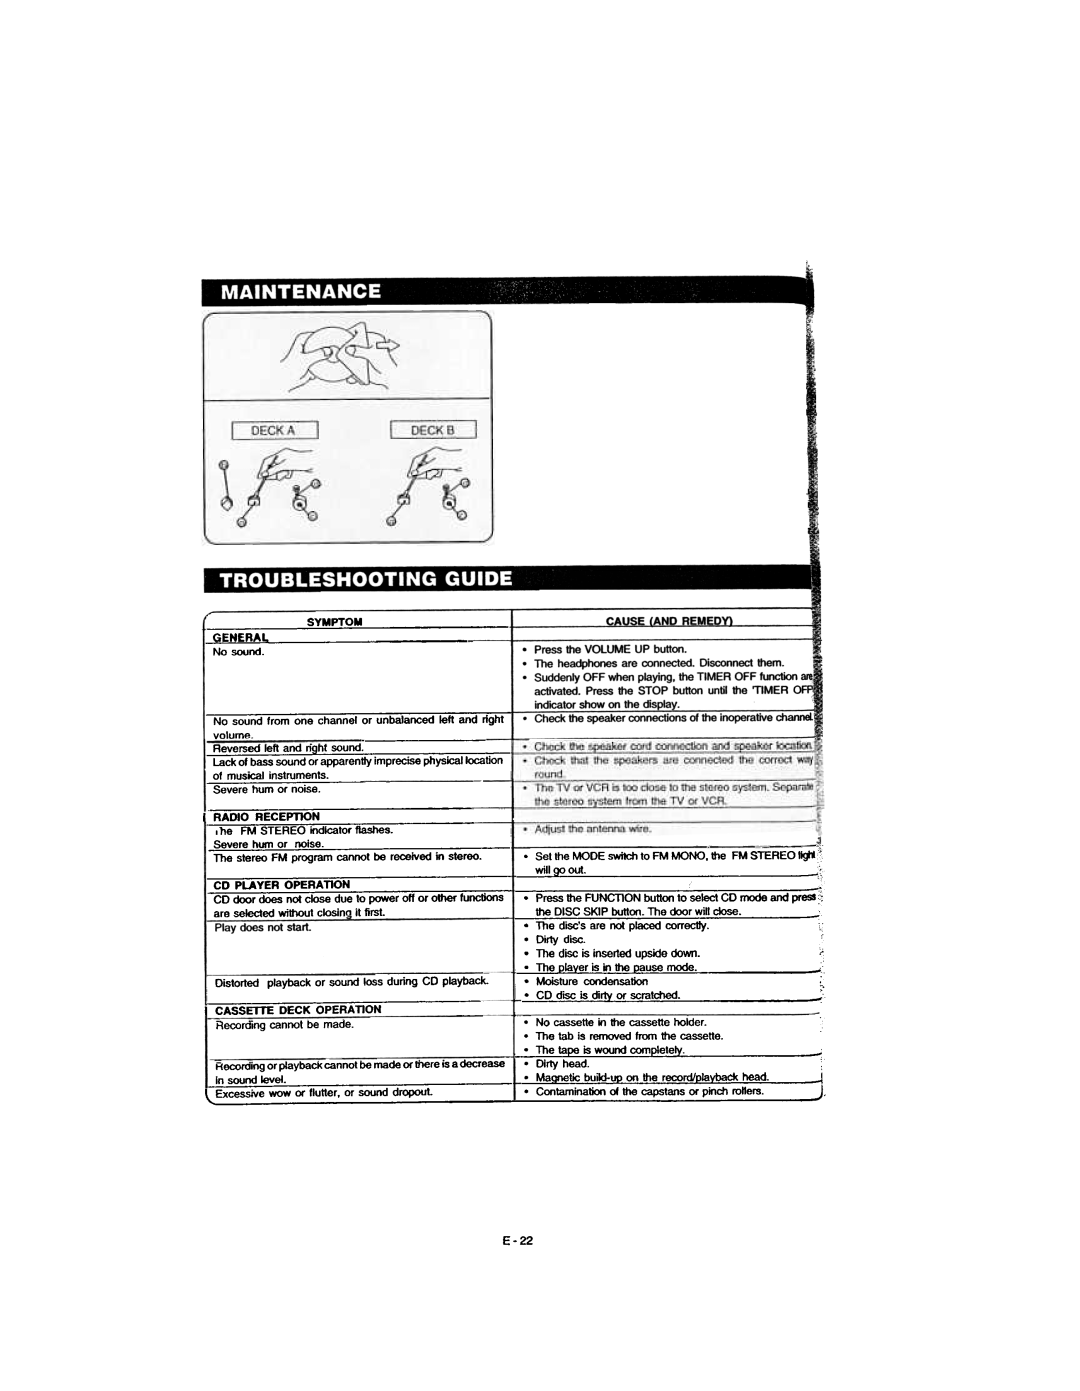 Dolby Laboratories CD Player manual I GENERAL SYMPTOM N -~ d~, E-22 